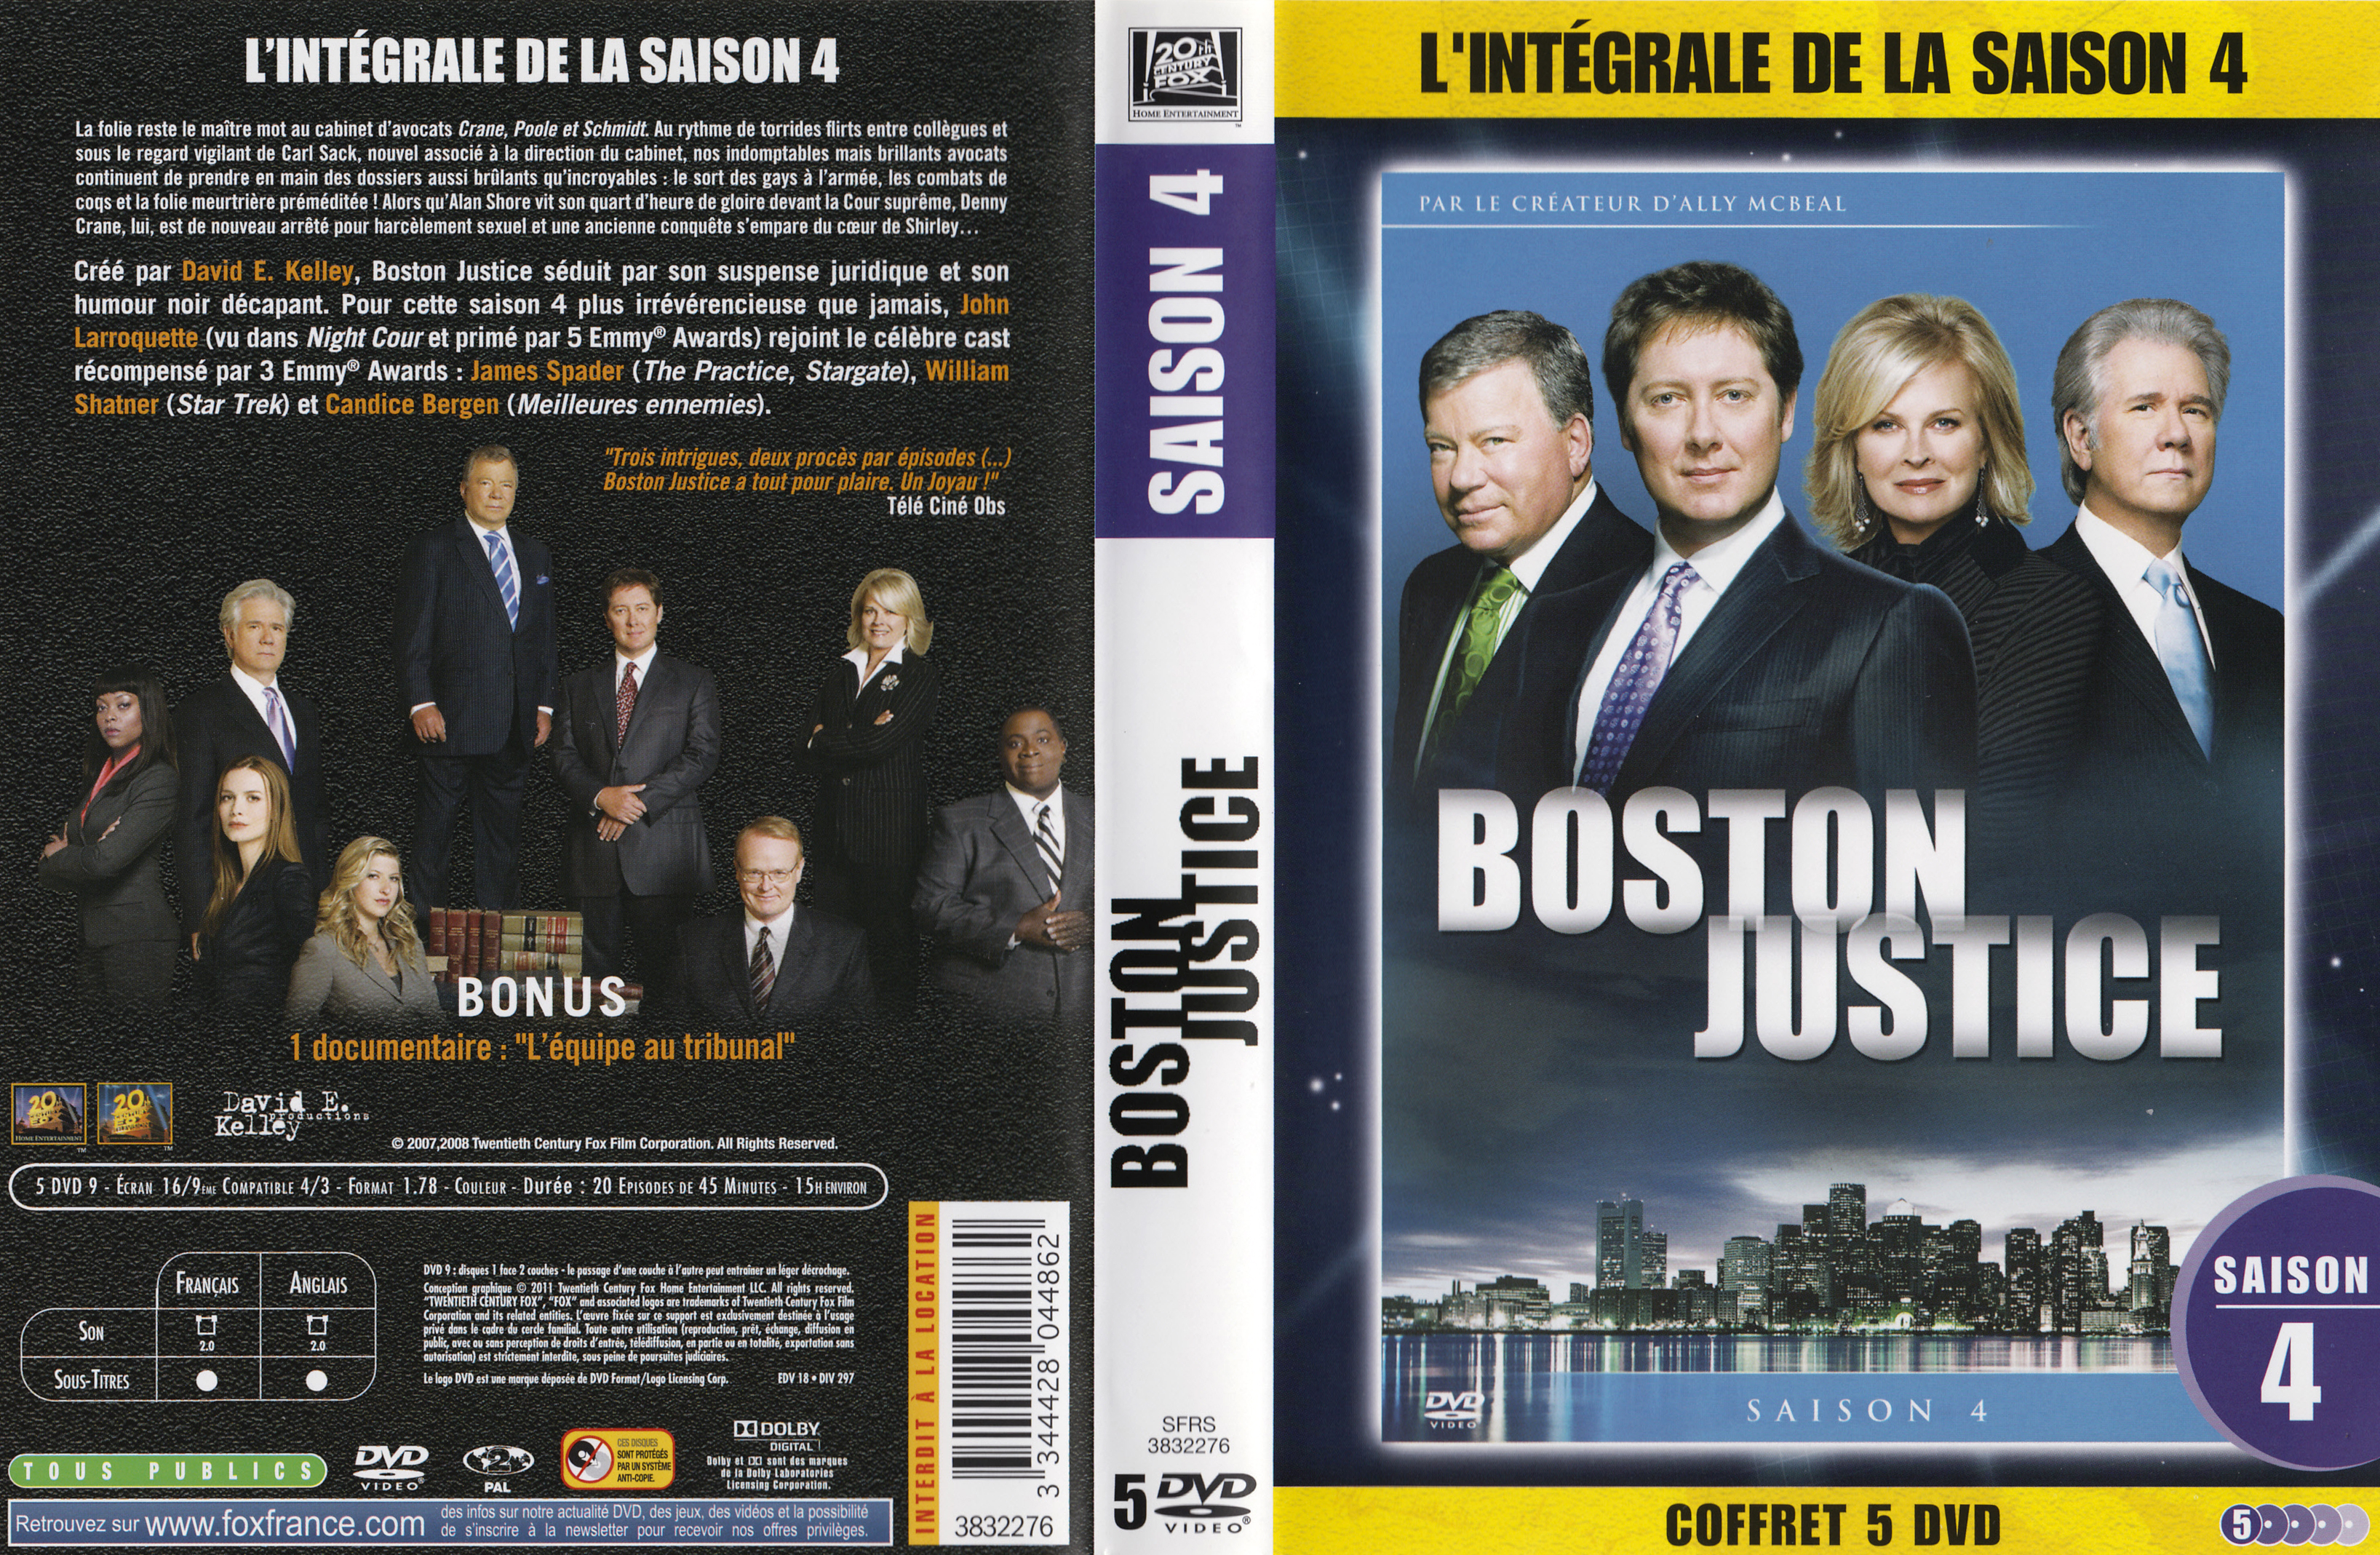 Jaquette DVD Boston justice Saison 4 COFFRET v2